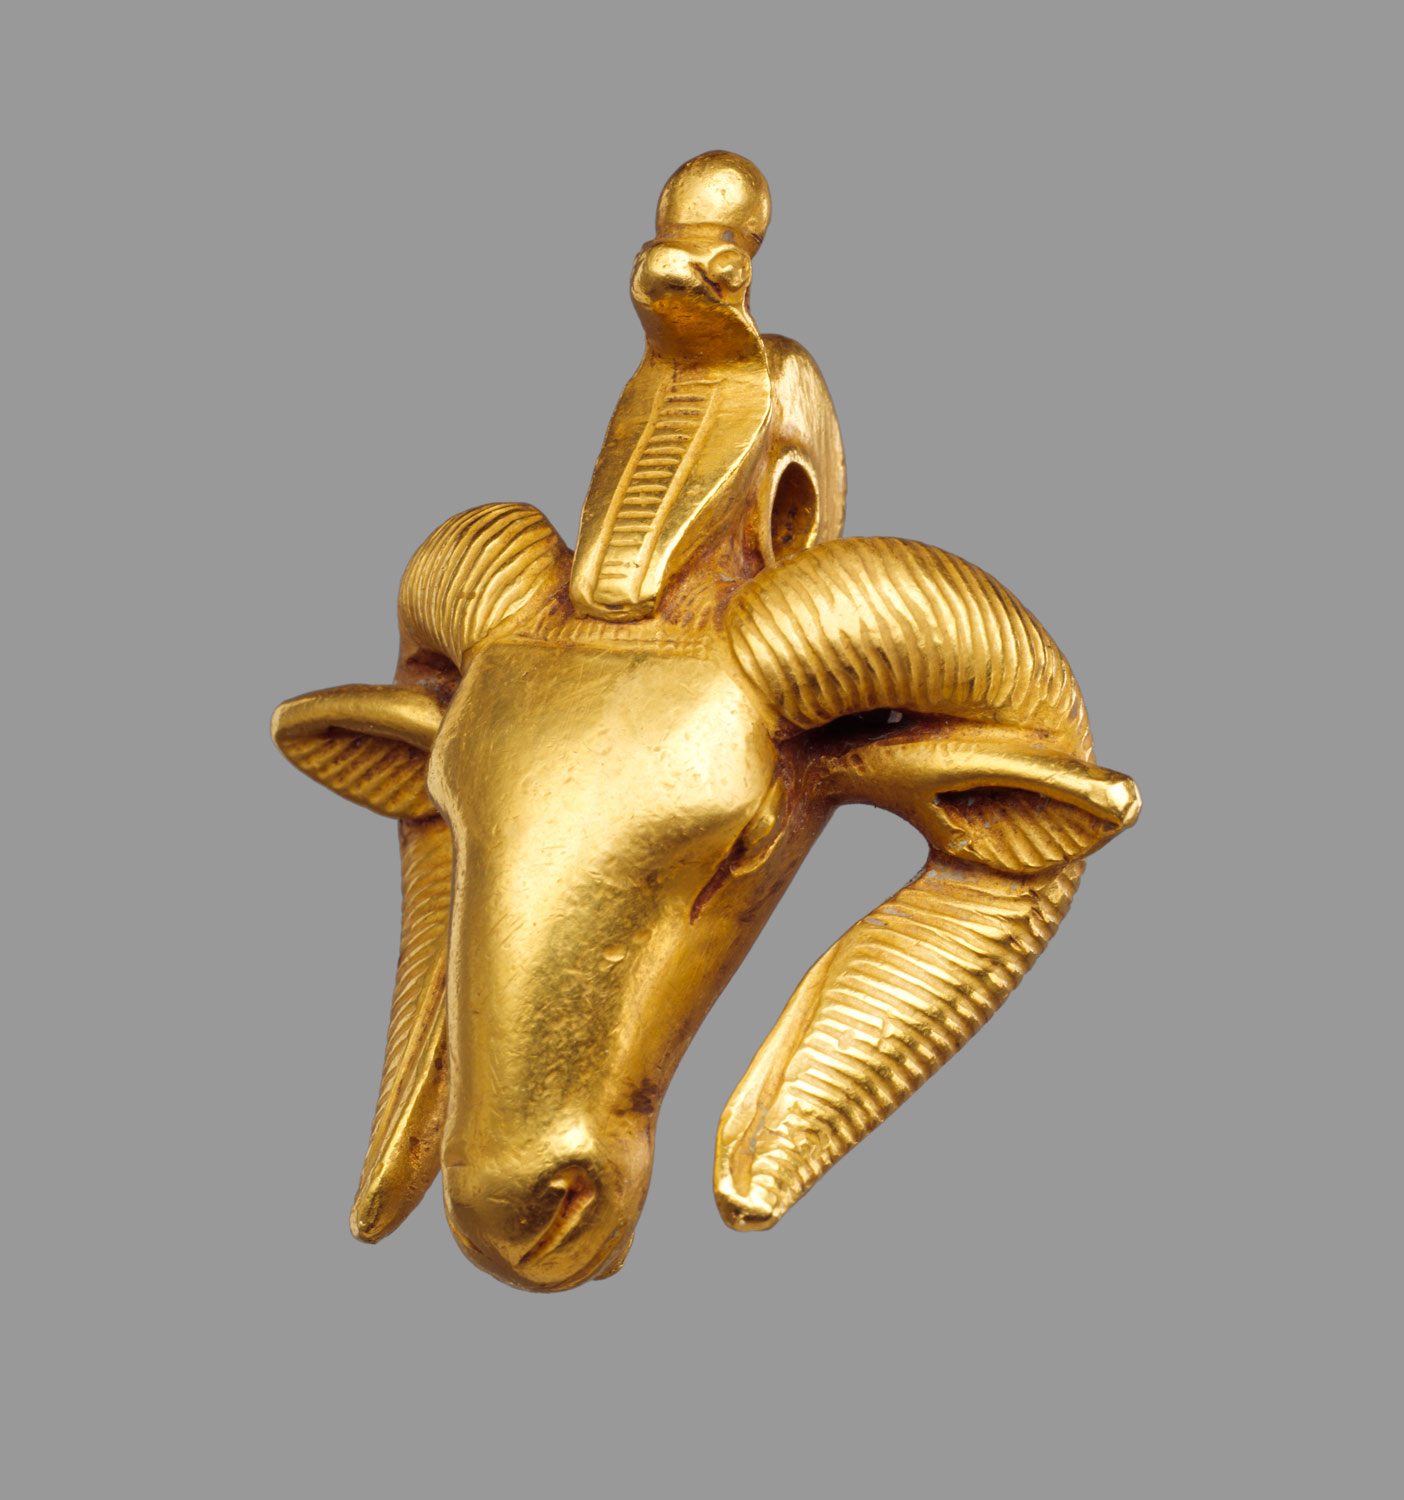 Rams-head amulet